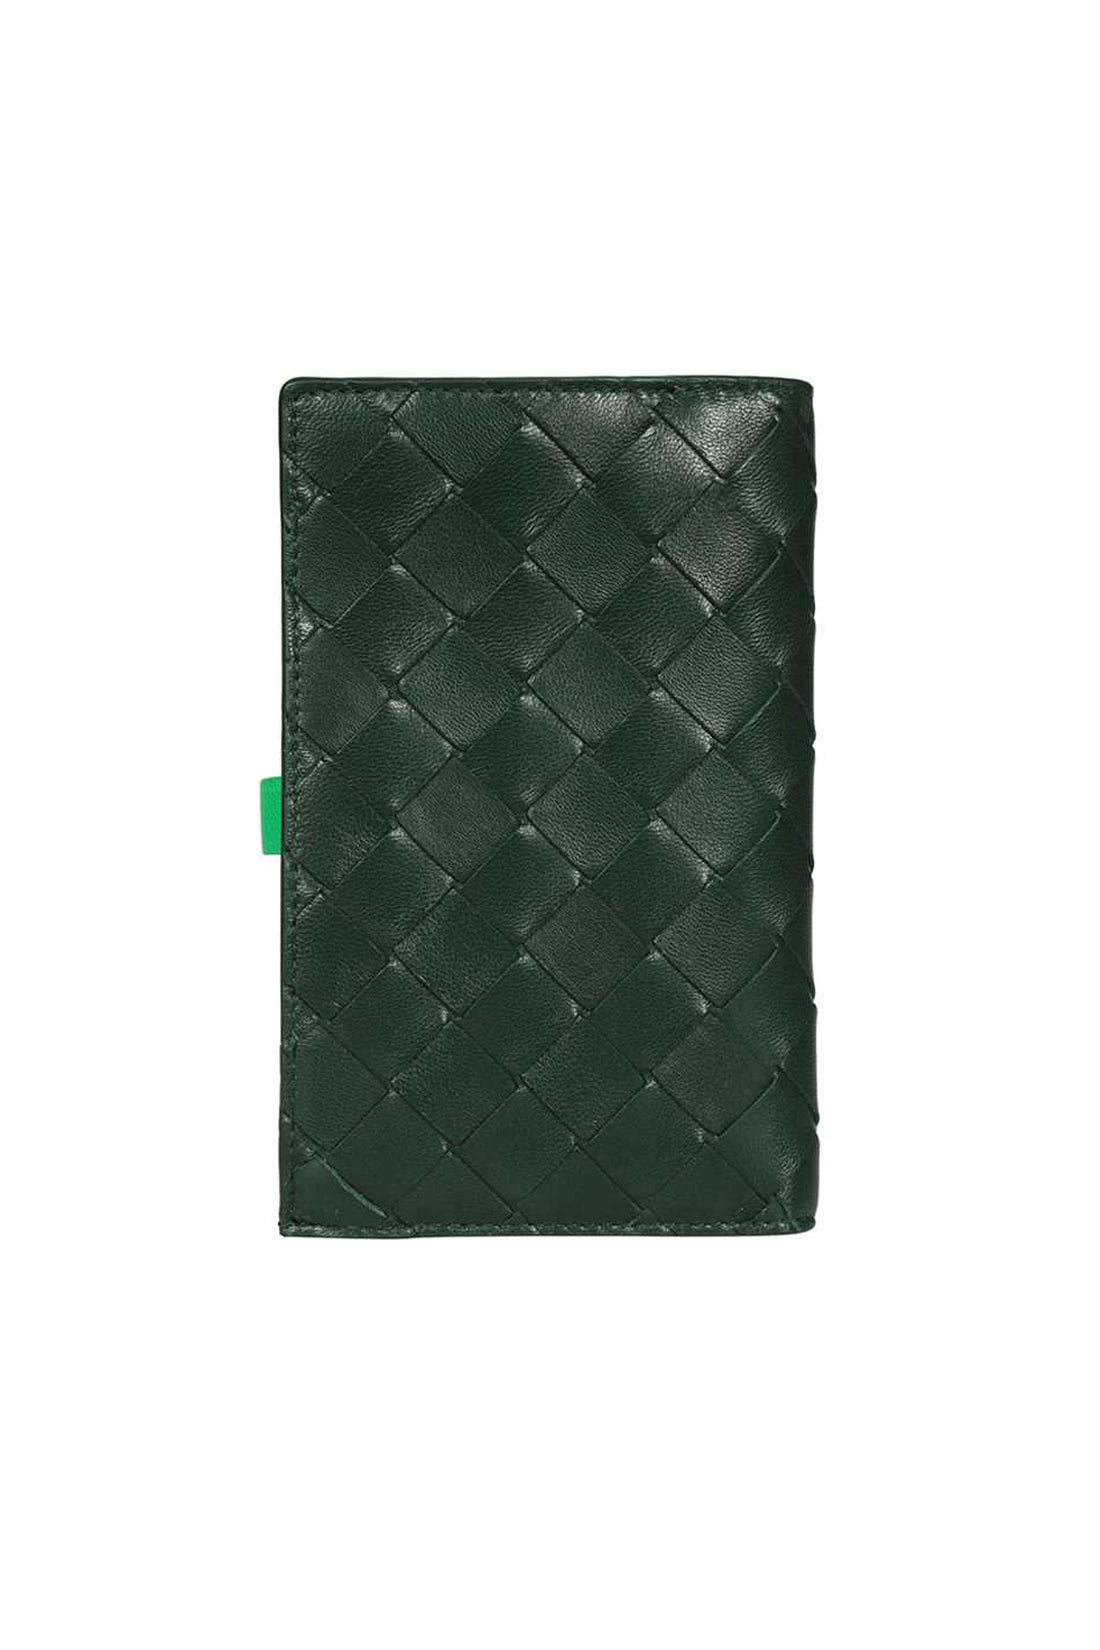 Bottega Veneta-OUTLET-SALE-Leather wallet-ARCHIVIST